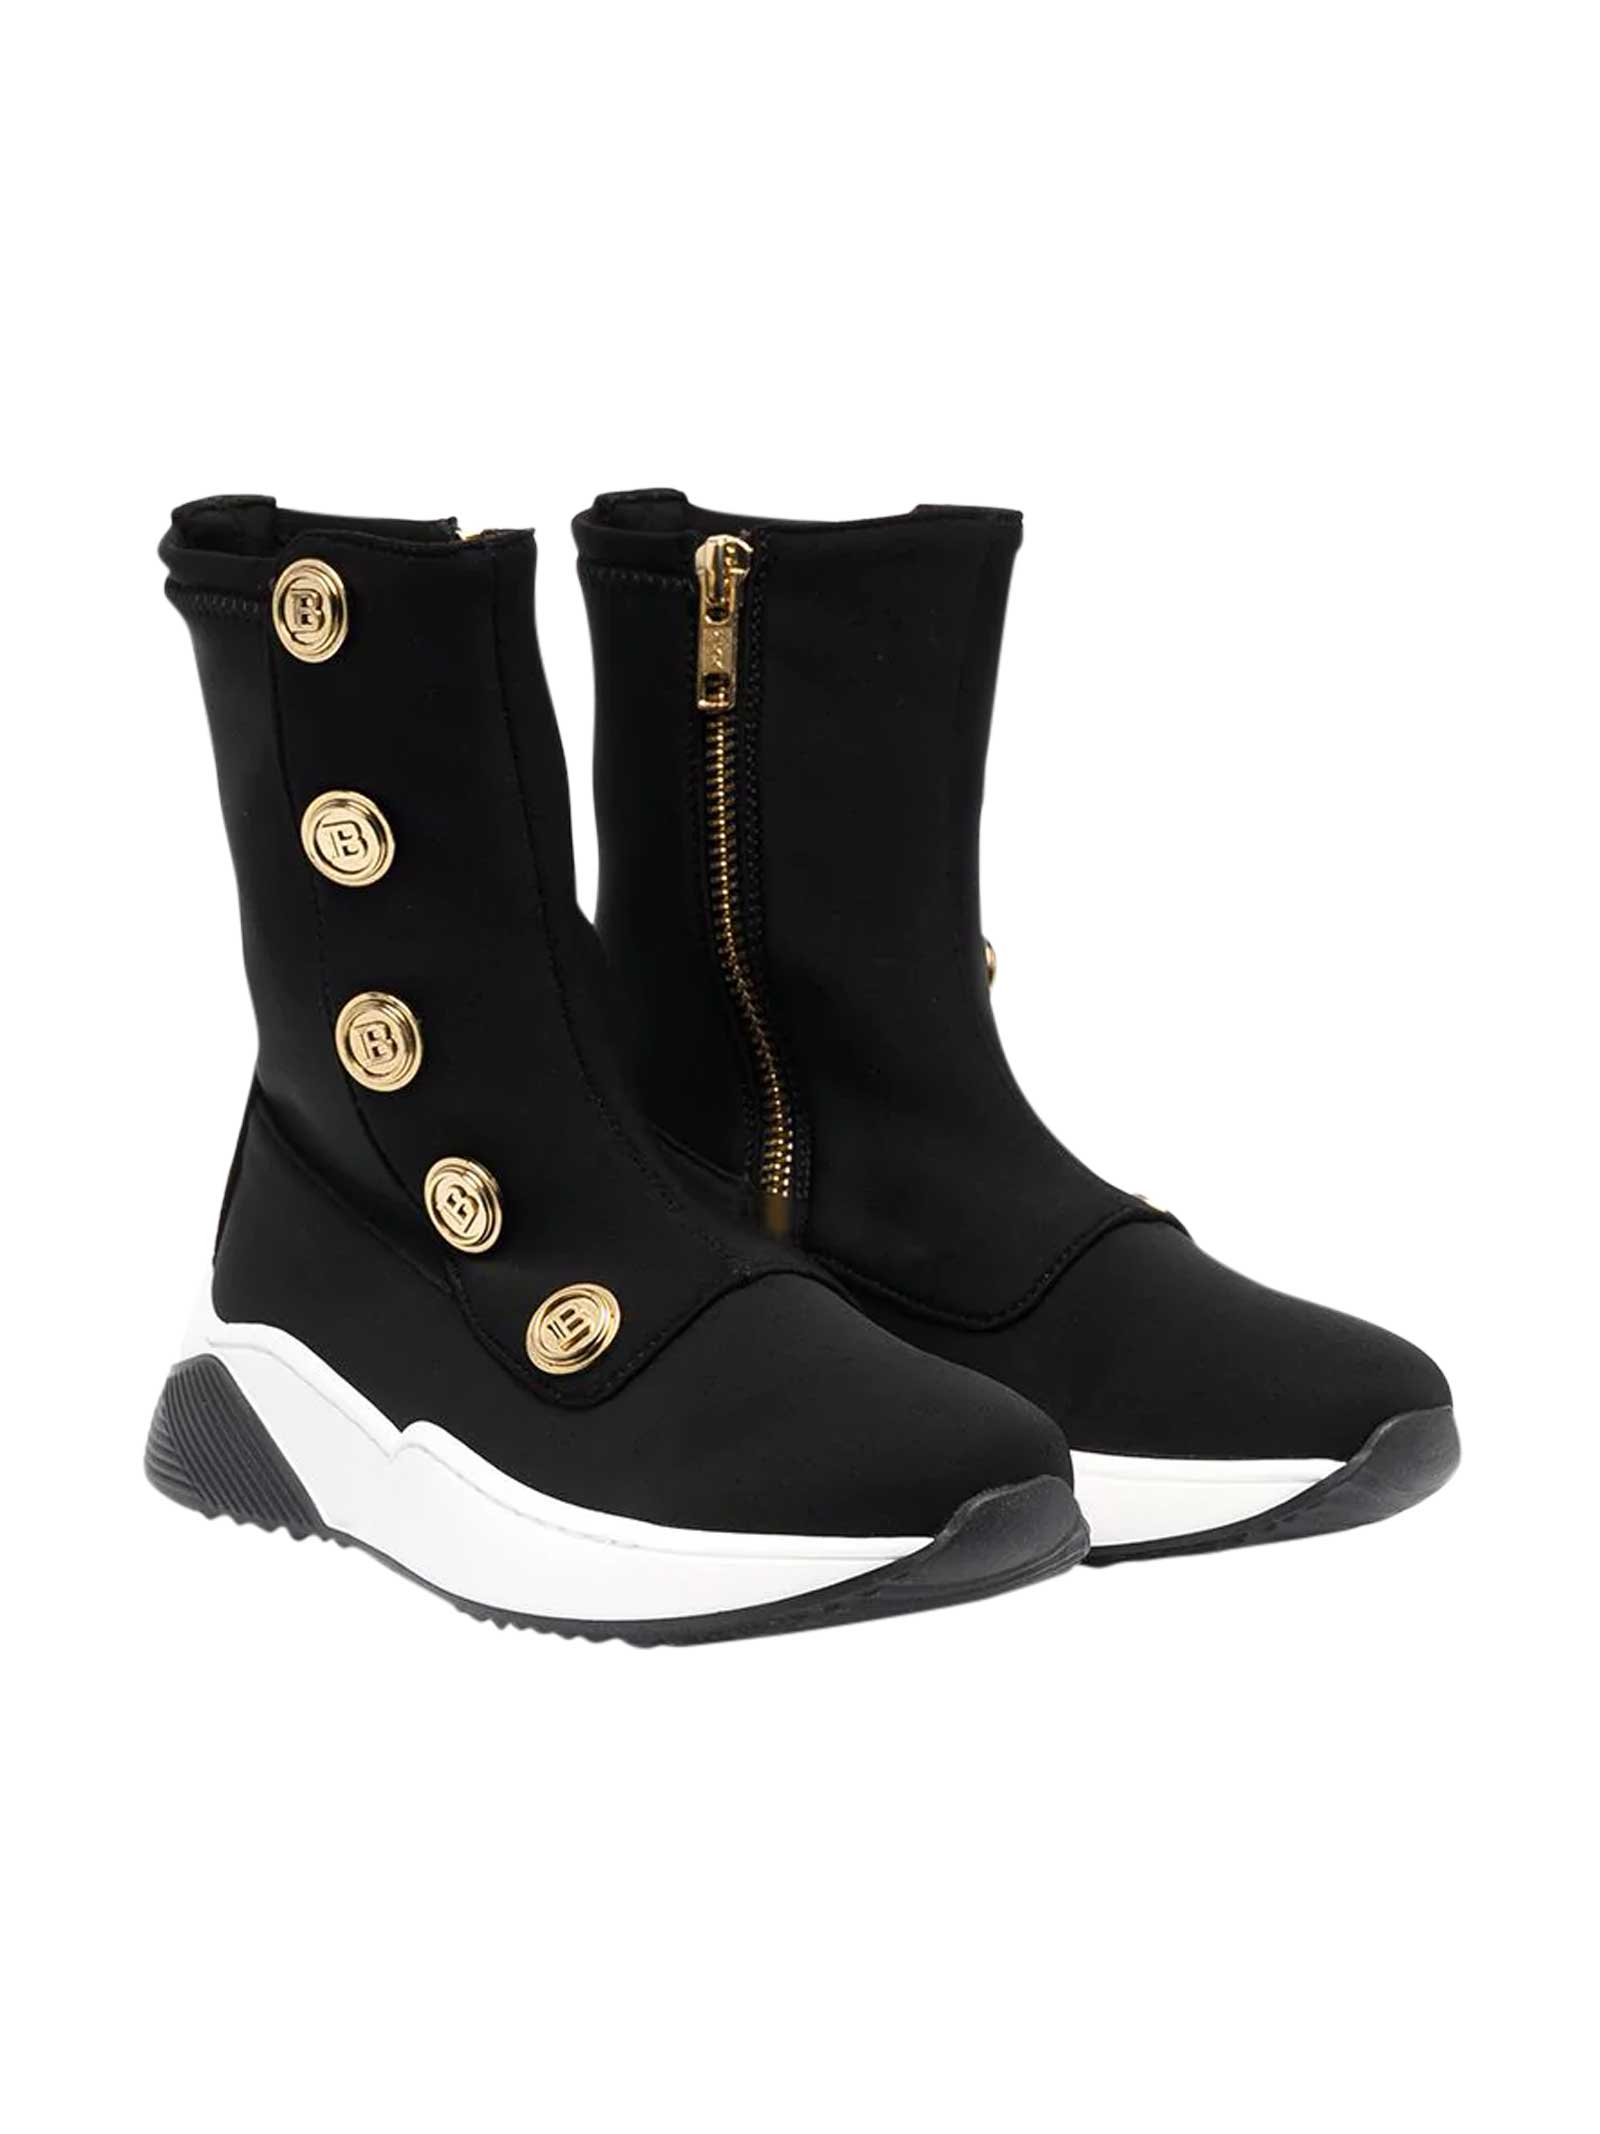 Buy Balmain Black Boots online, shop Balmain shoes with free shipping